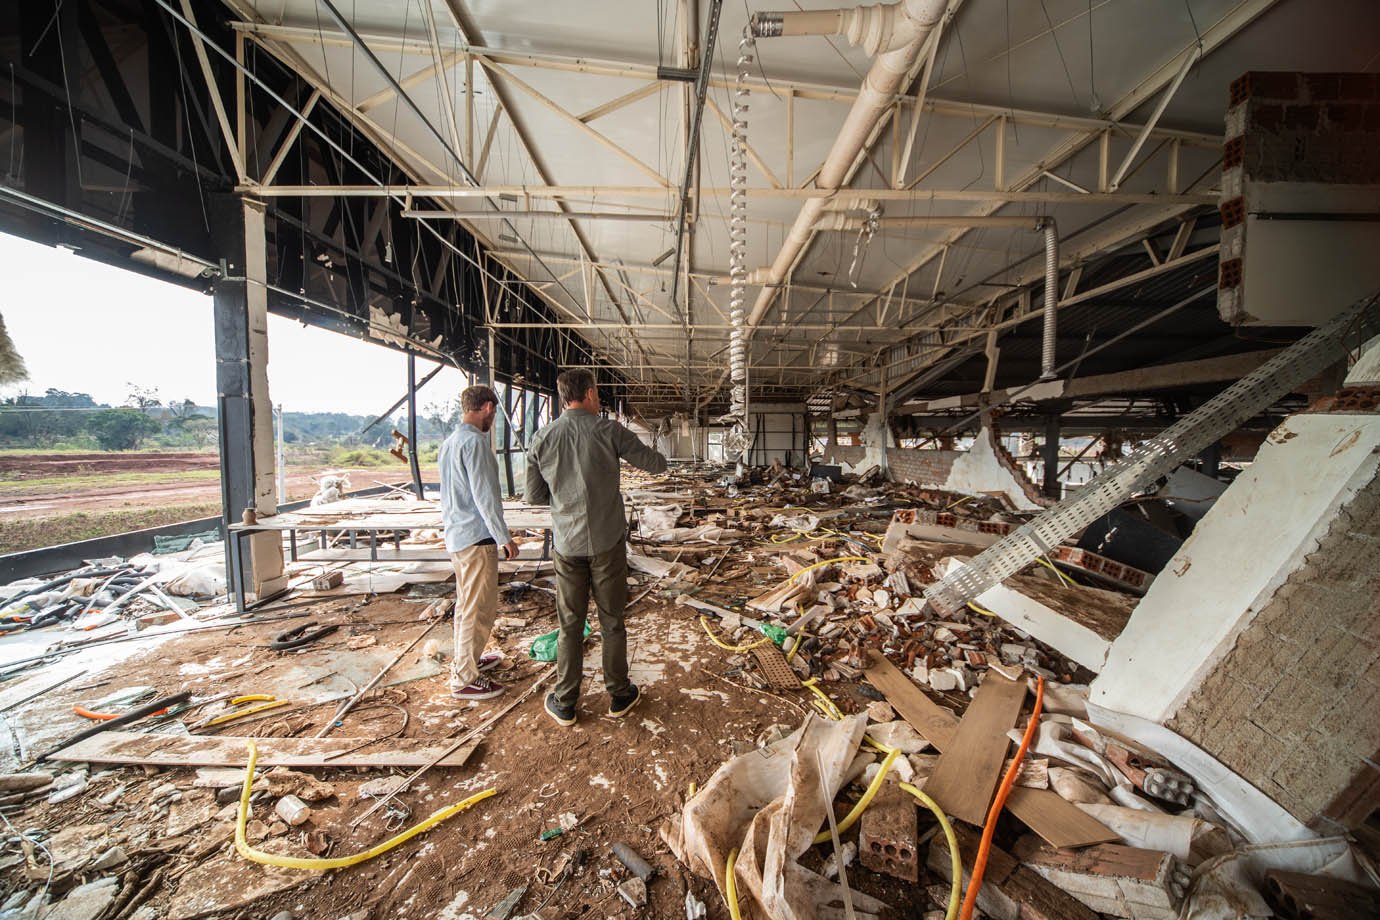 Lajeadense Vidros - empresa que foi destruida pela alta dos rios em Lajeado RS

Foto: Leandro Fonseca
Data: 03/07/2024